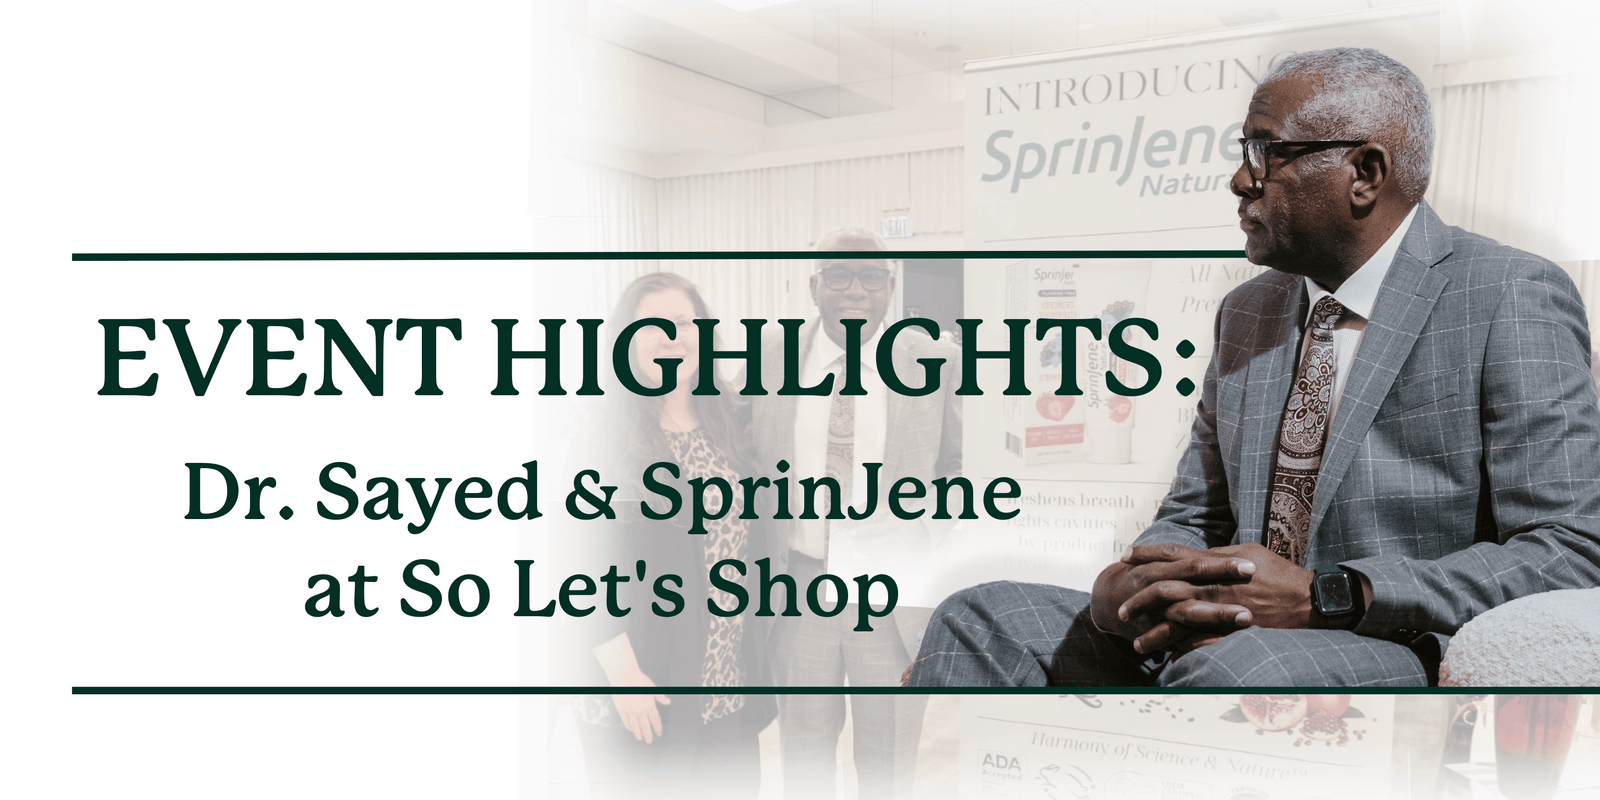 Event Highlights: Dr. Sayed and SprinJene at So Let's Shop